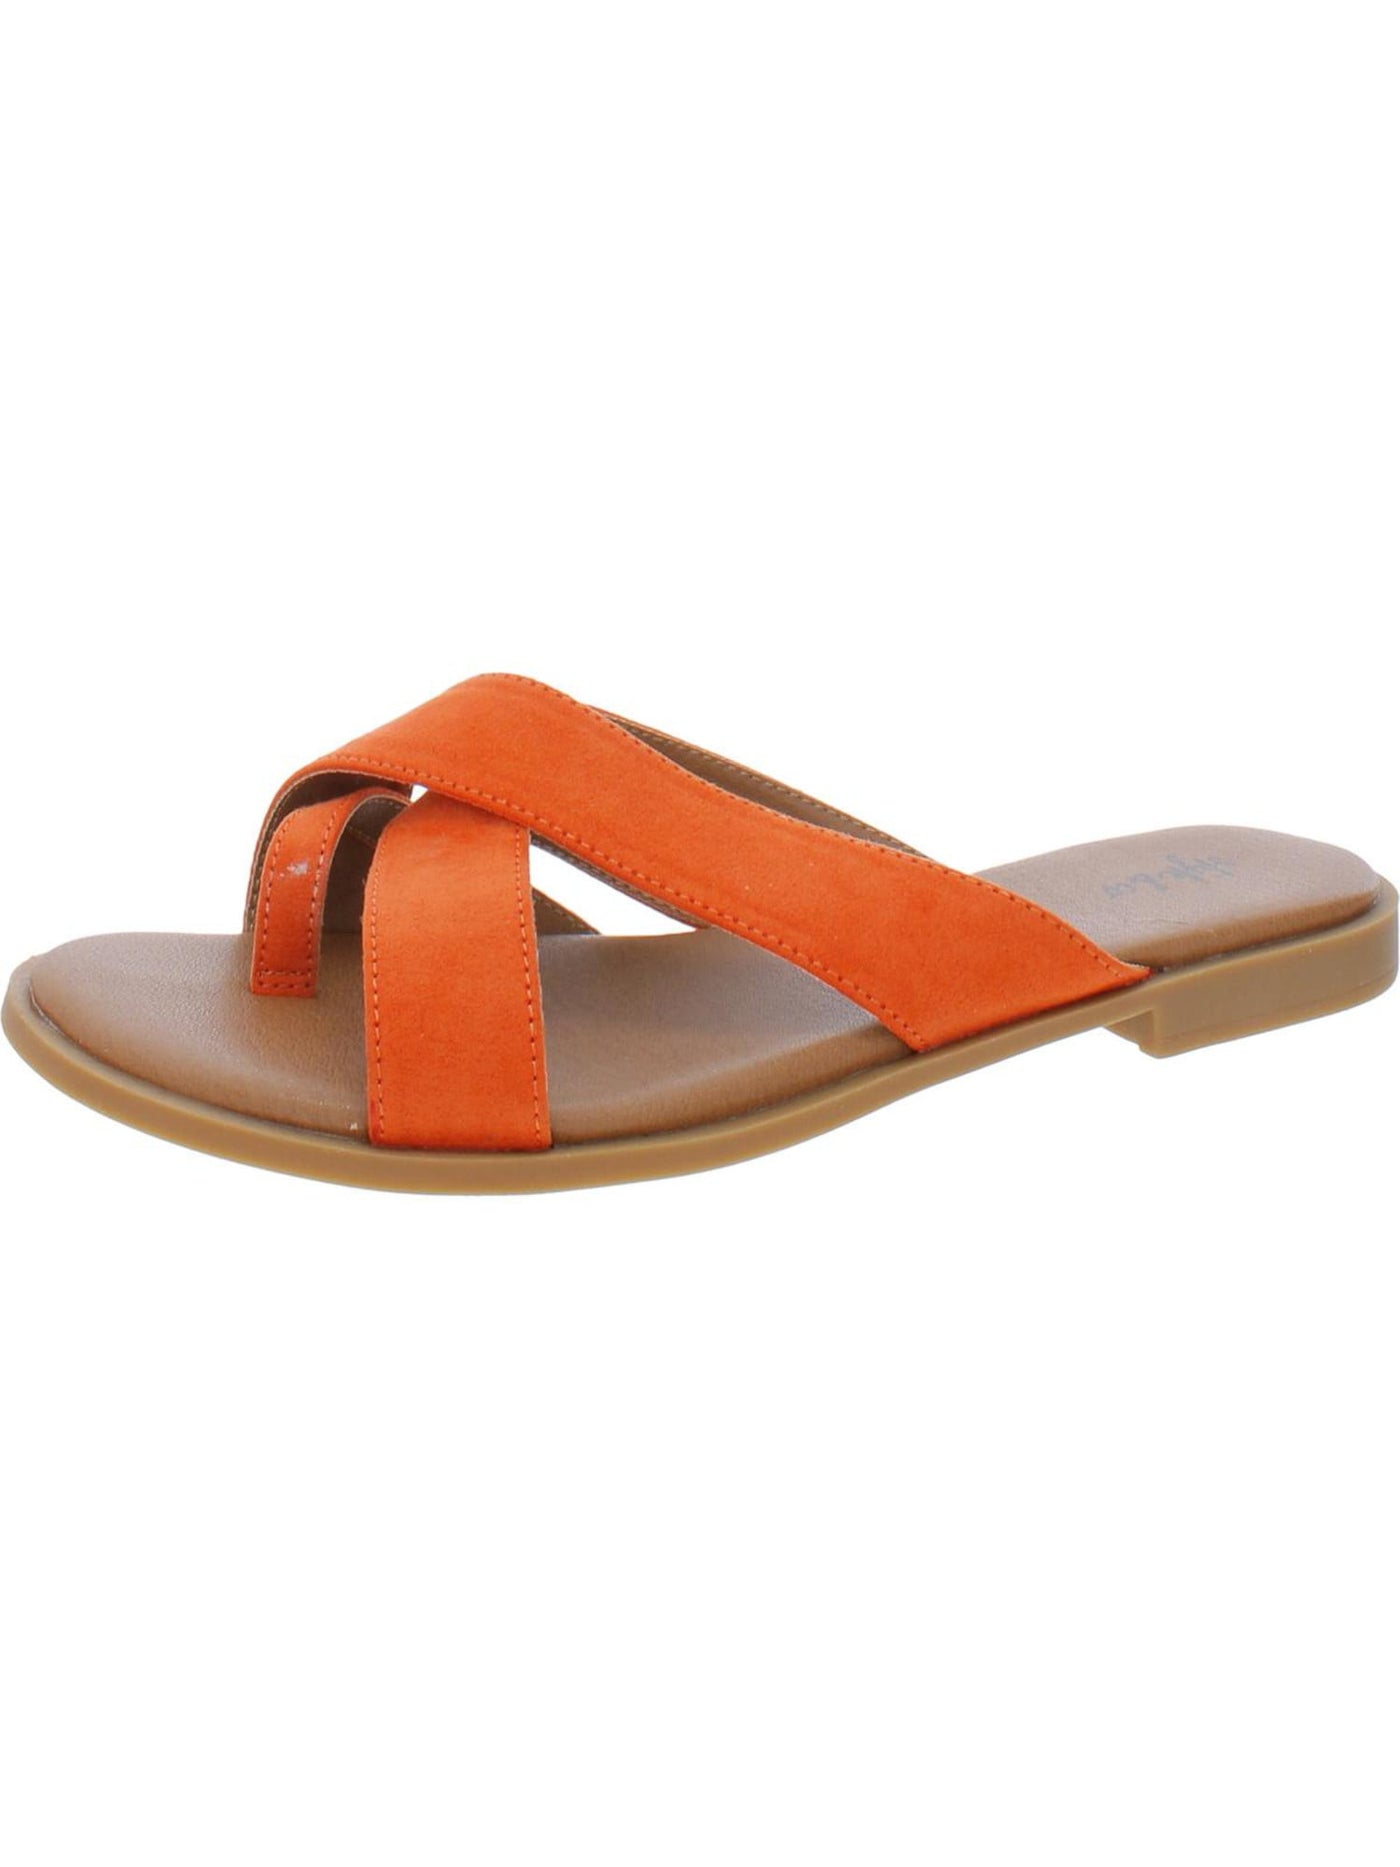 STYLE & COMPANY Womens Orange Cushioned Carolyn Round Toe Slip On Sandals Shoes 7 M